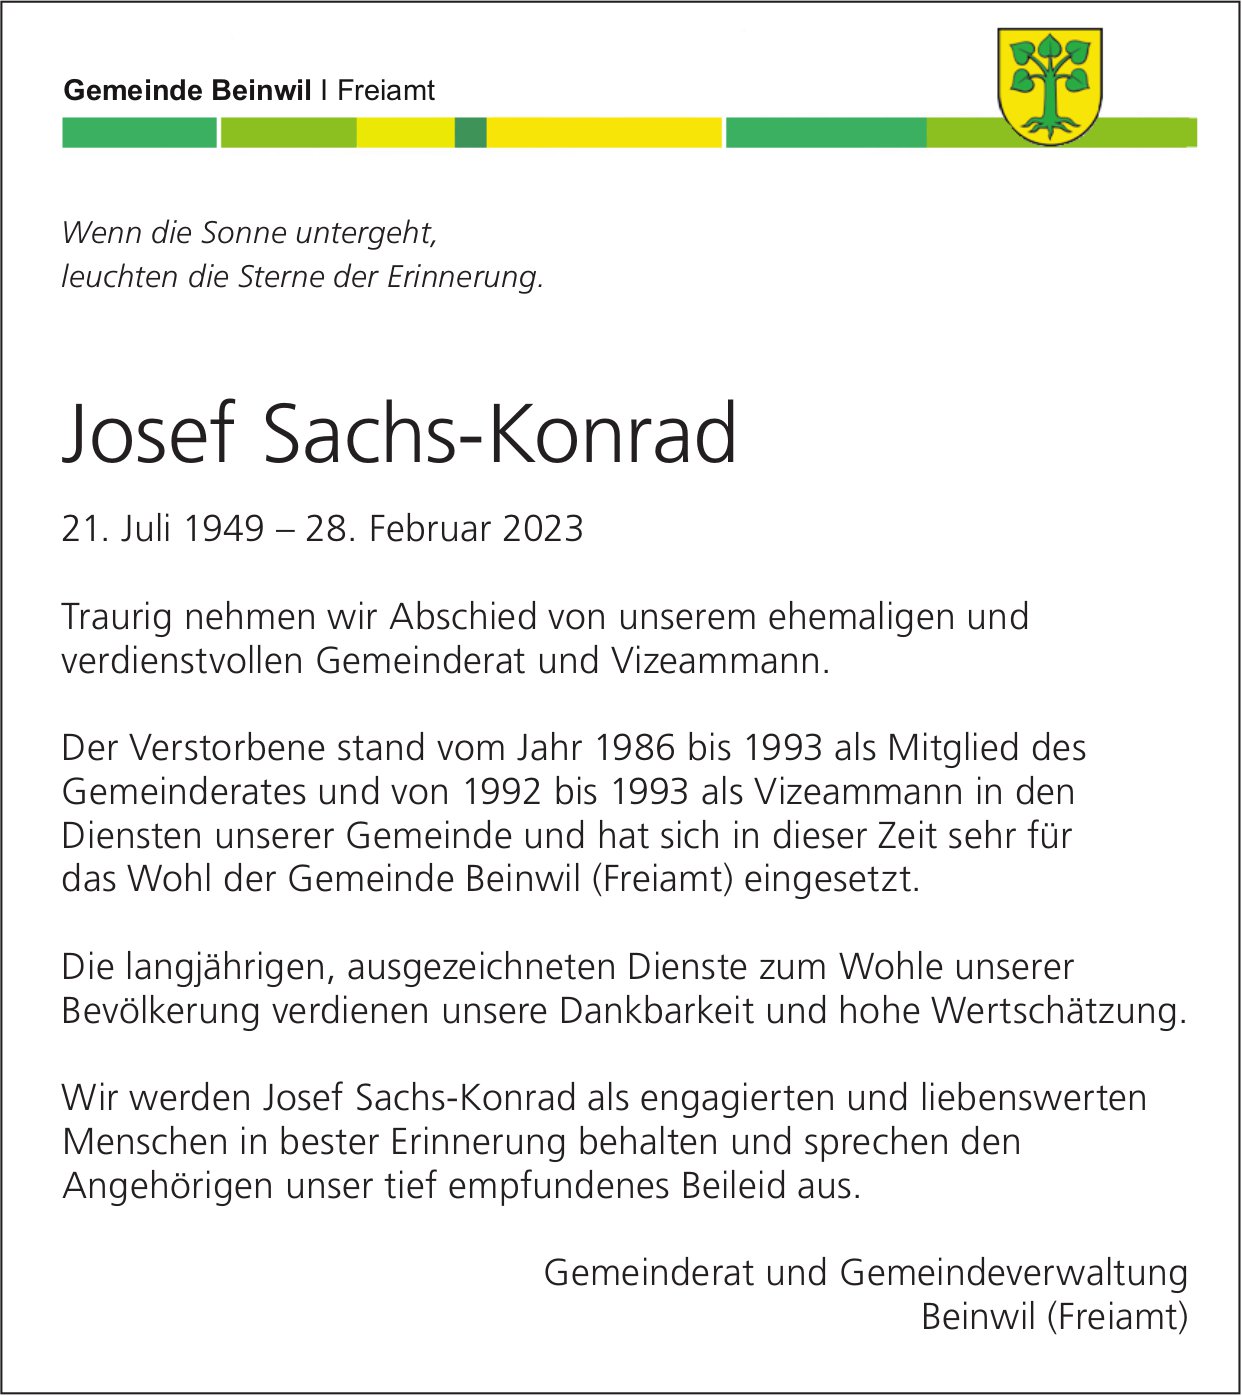 Sachs-Konrad Josef, Februar 2023 / TA